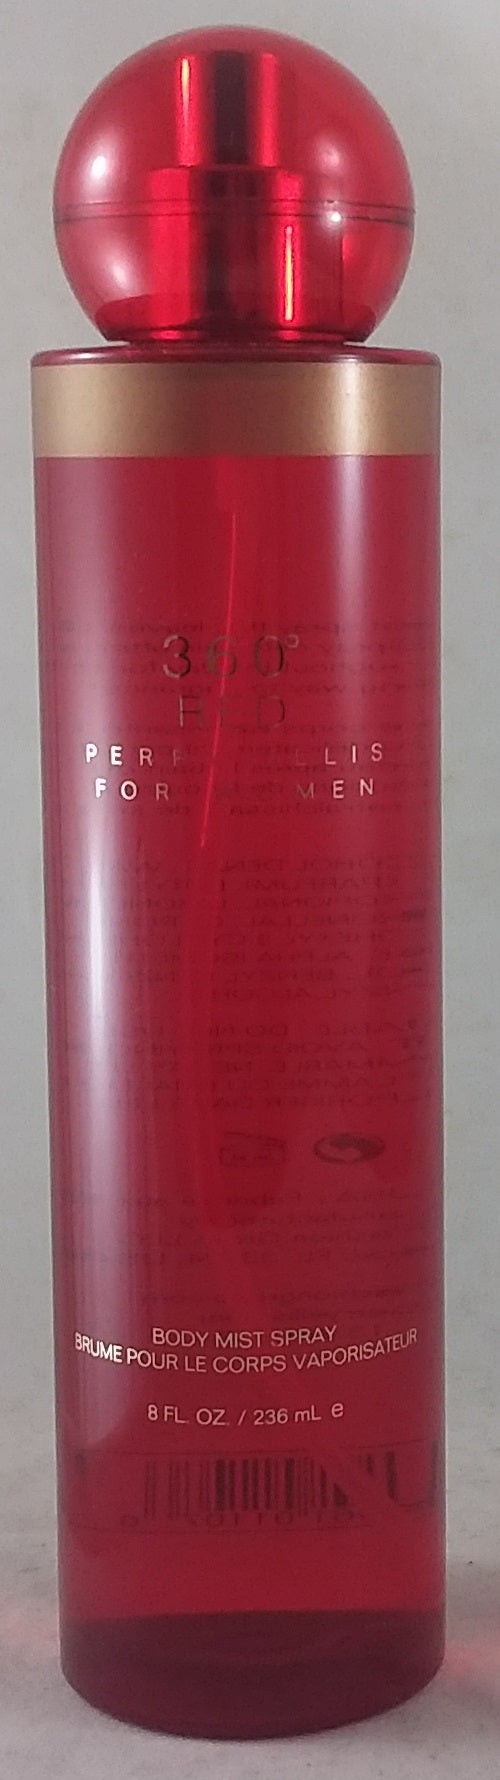 Perry Ellis 360° Red for Women, 236ml Body Mist Spray